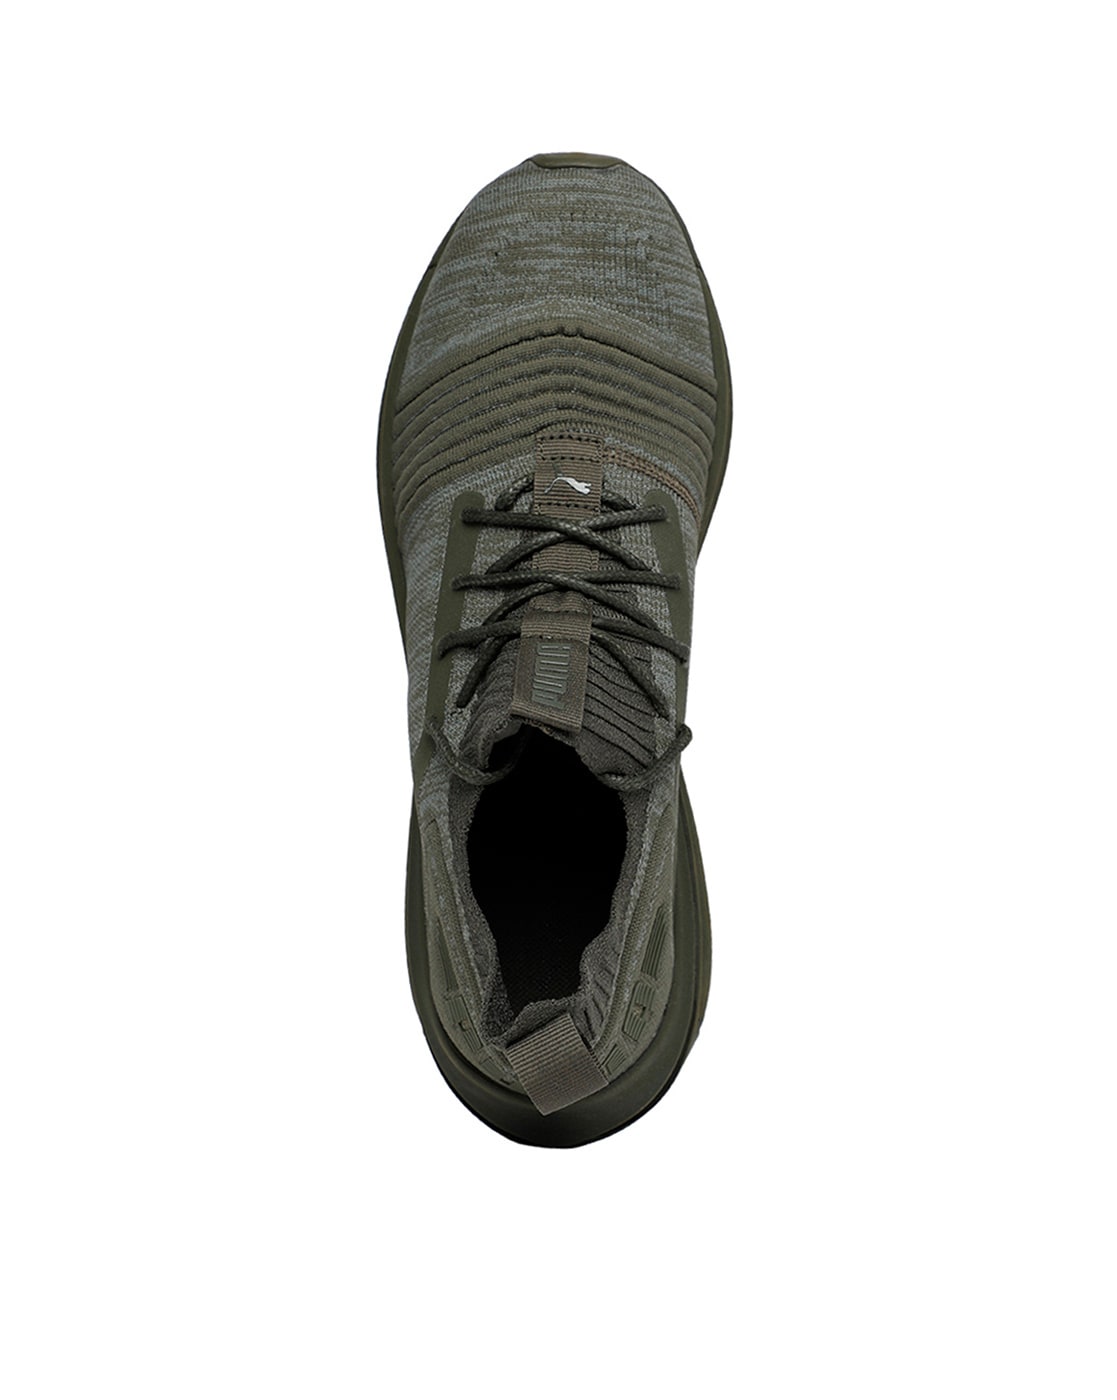 puma military green shoes